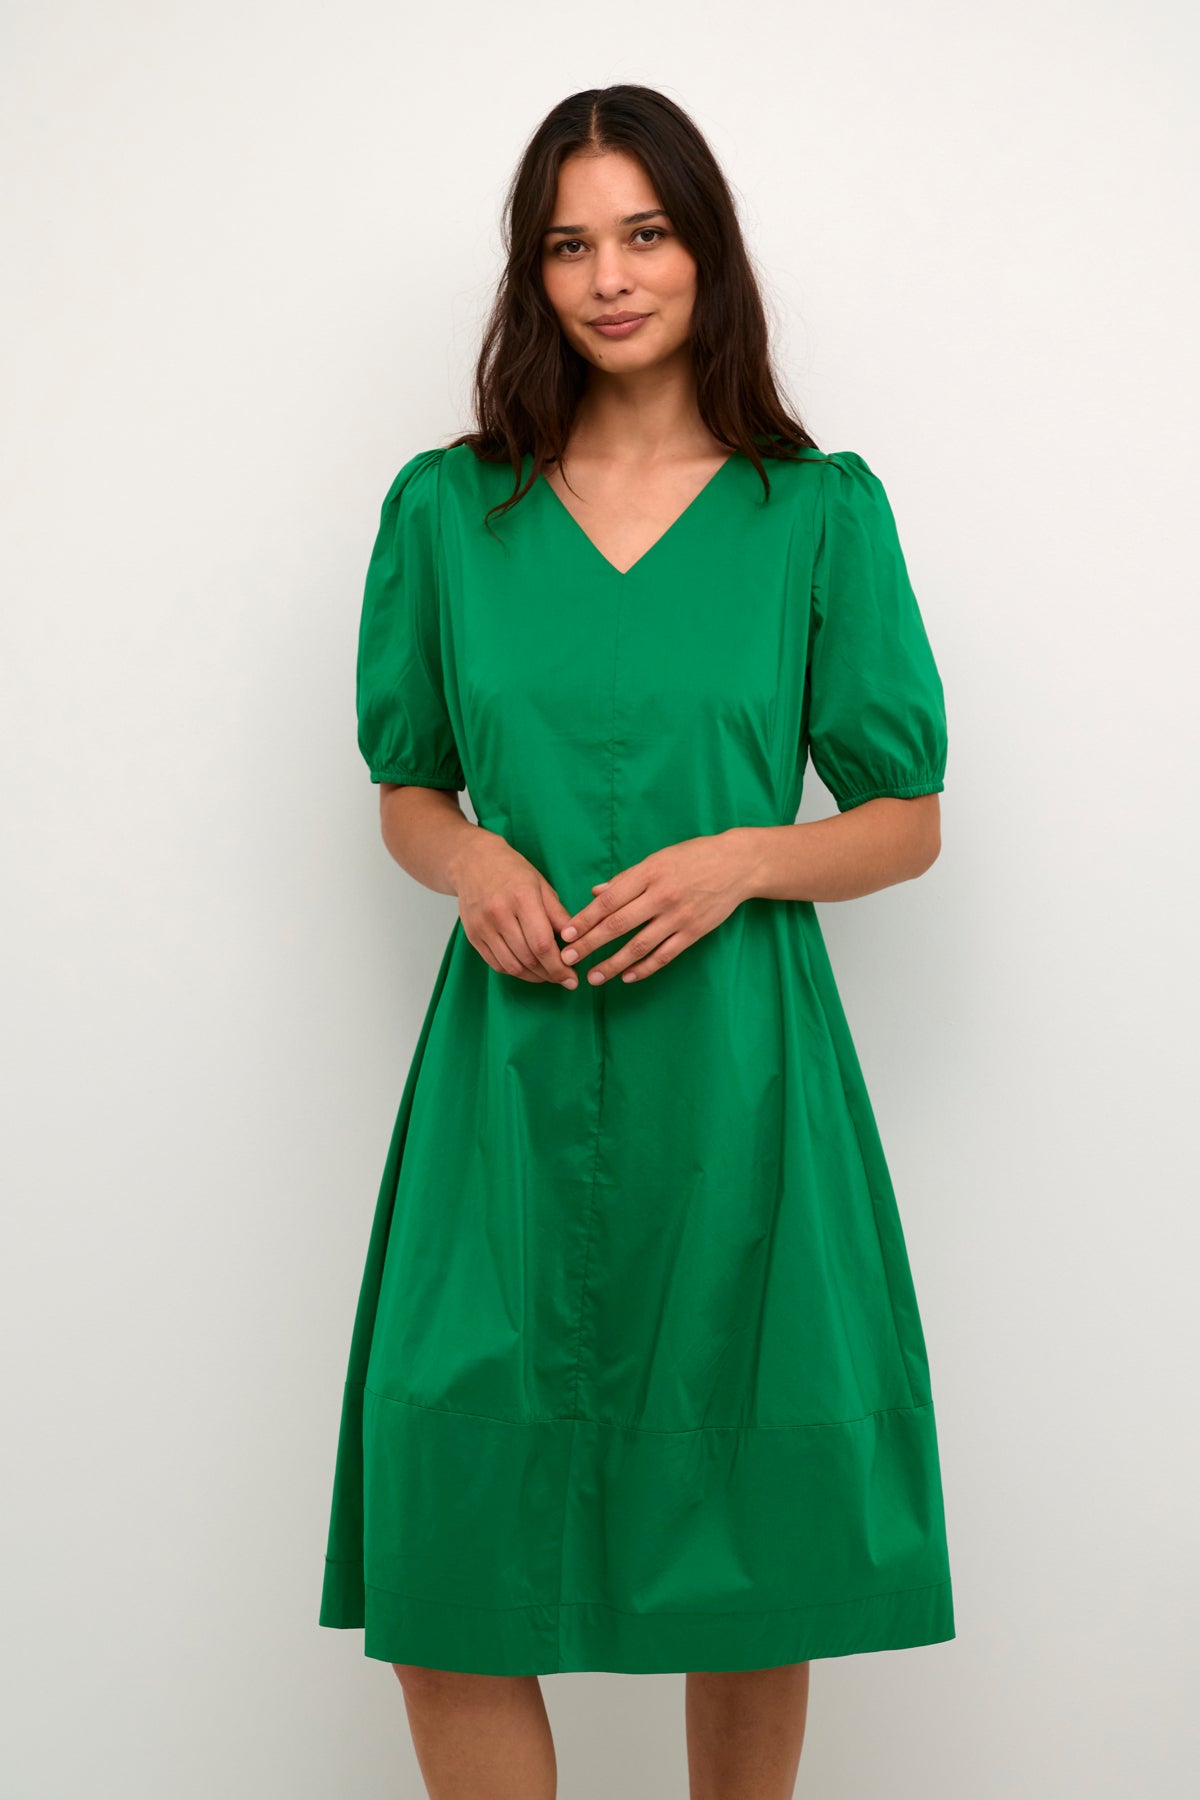 Antoinett Short Sleeve Dress in Jolly Green